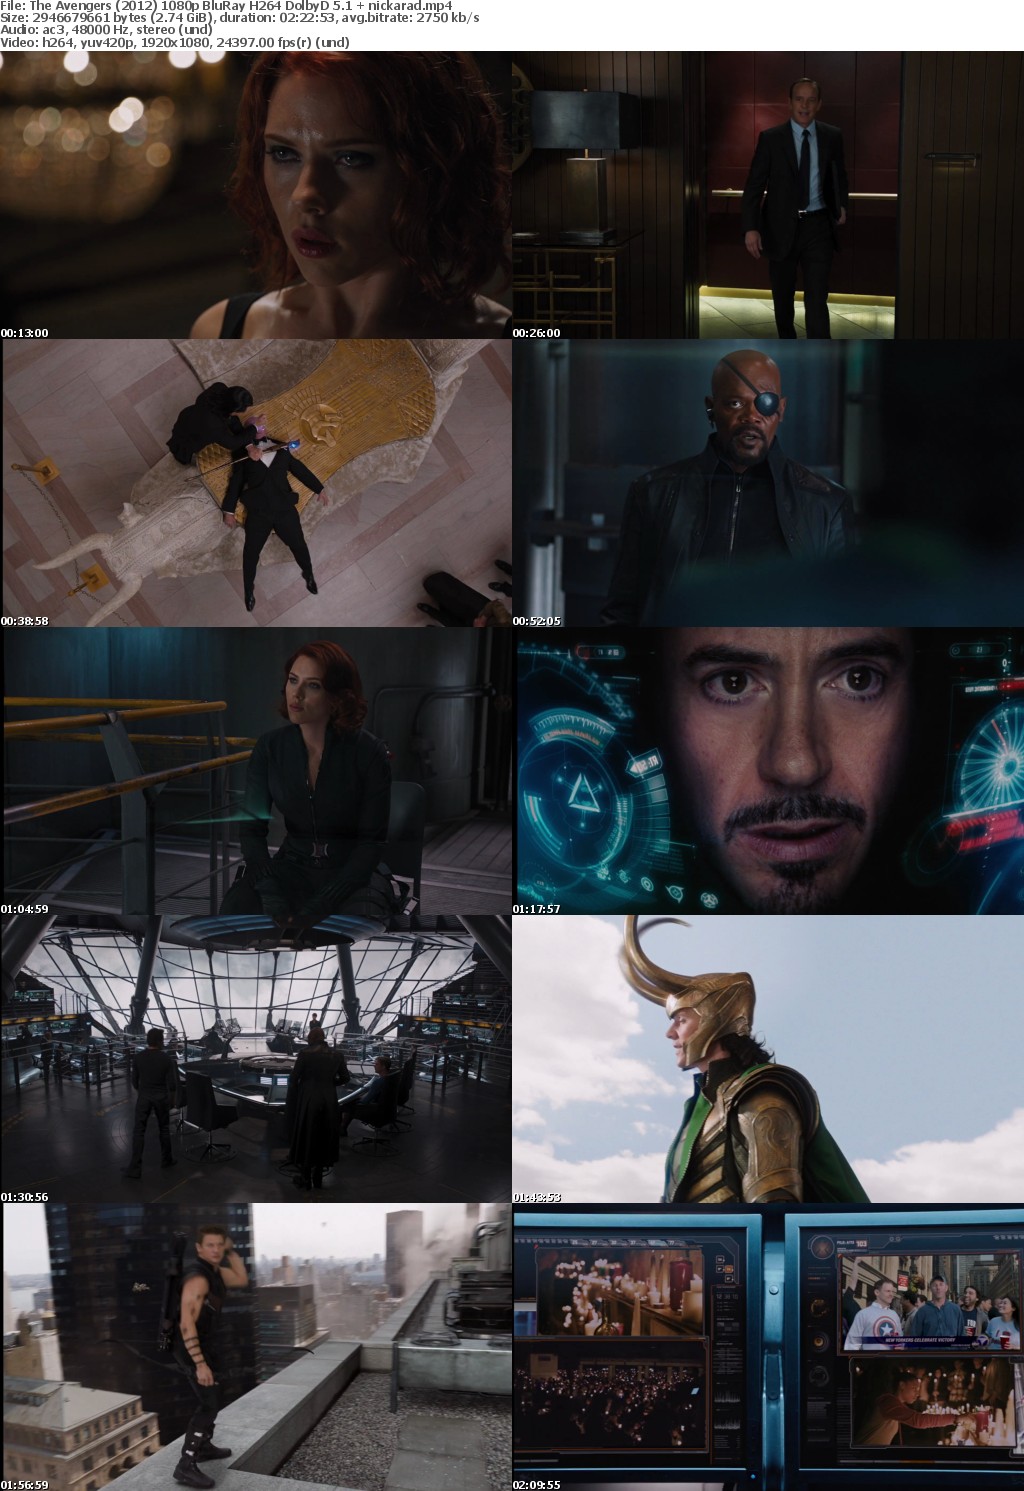 The Avengers (2012) 1080p BluRay H264 DolbyD 5 1 nickarad